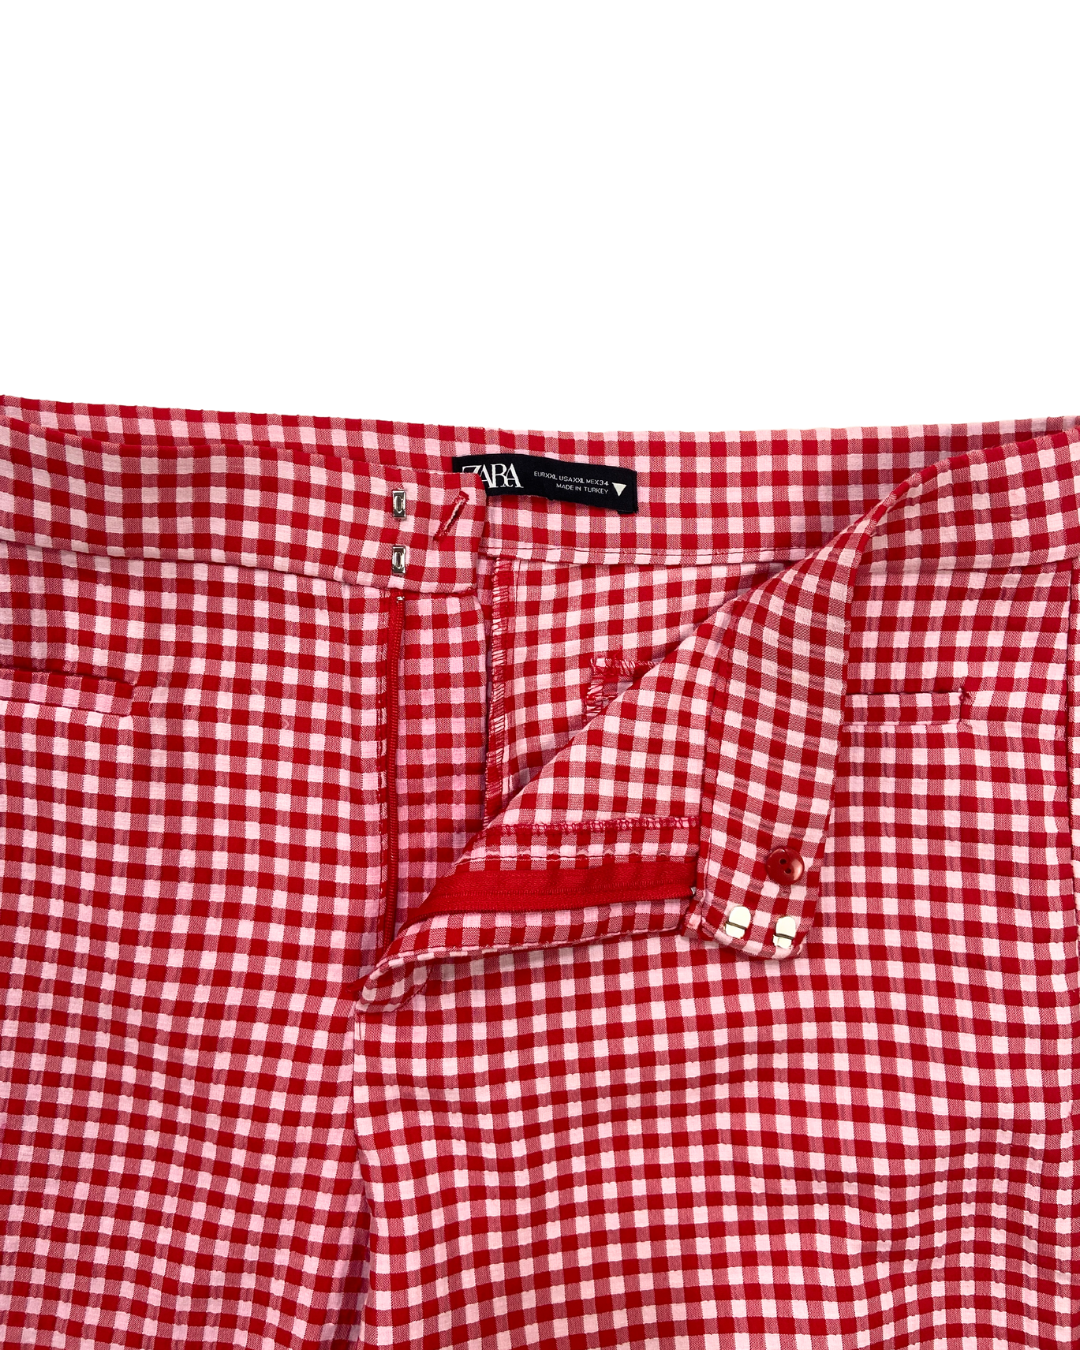 Zara Red Gingham Capri Trousers